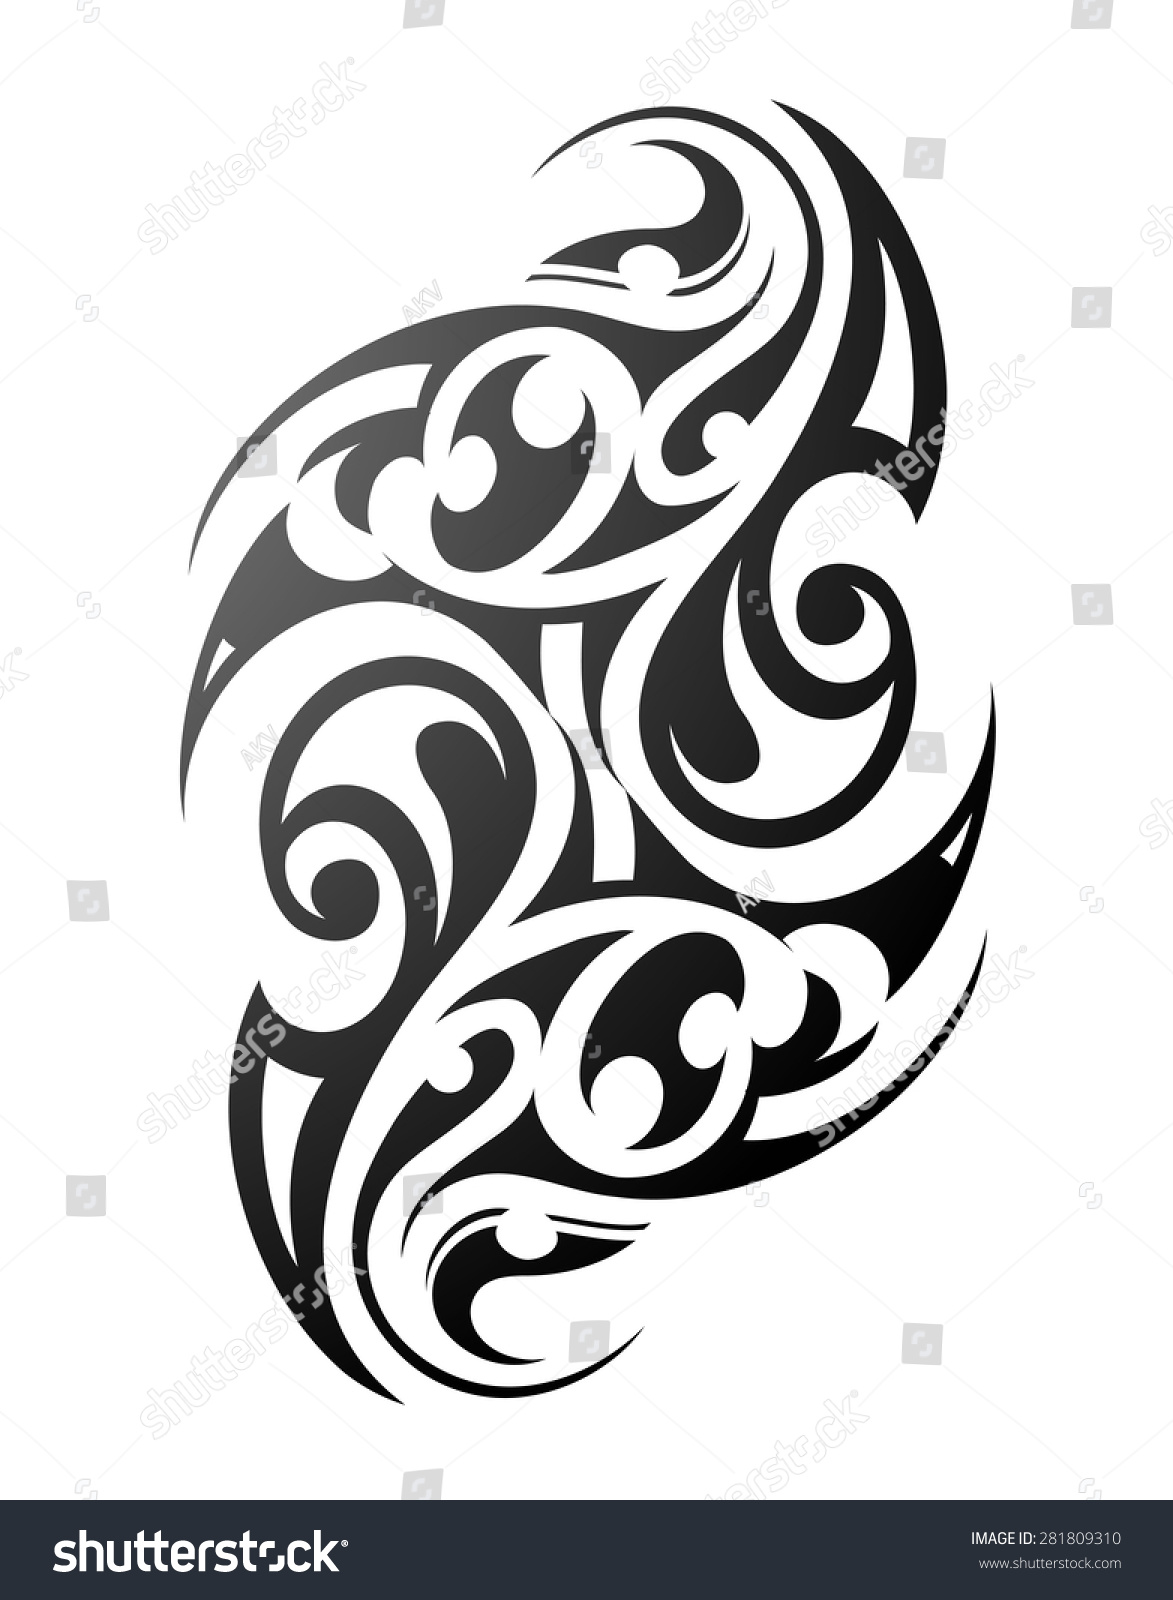 Maori Tribal Tattoo Design Ethnic Ornament Stock Vector 281809310 Shutterstock